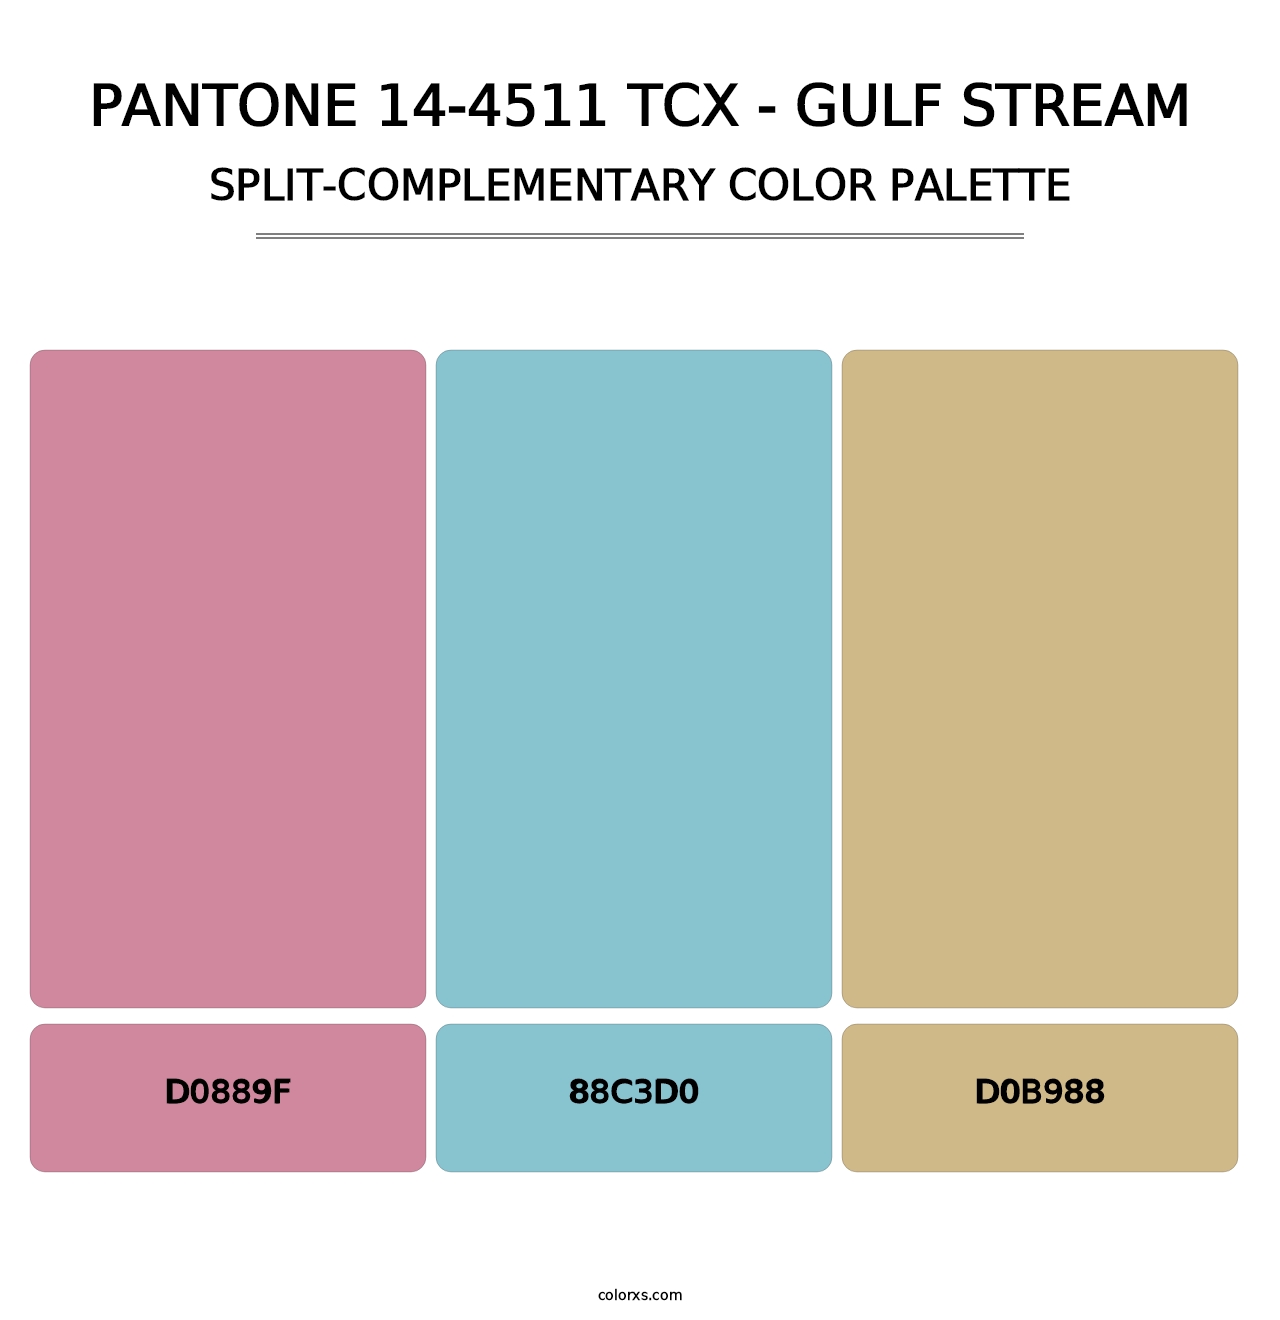 PANTONE 14-4511 TCX - Gulf Stream - Split-Complementary Color Palette